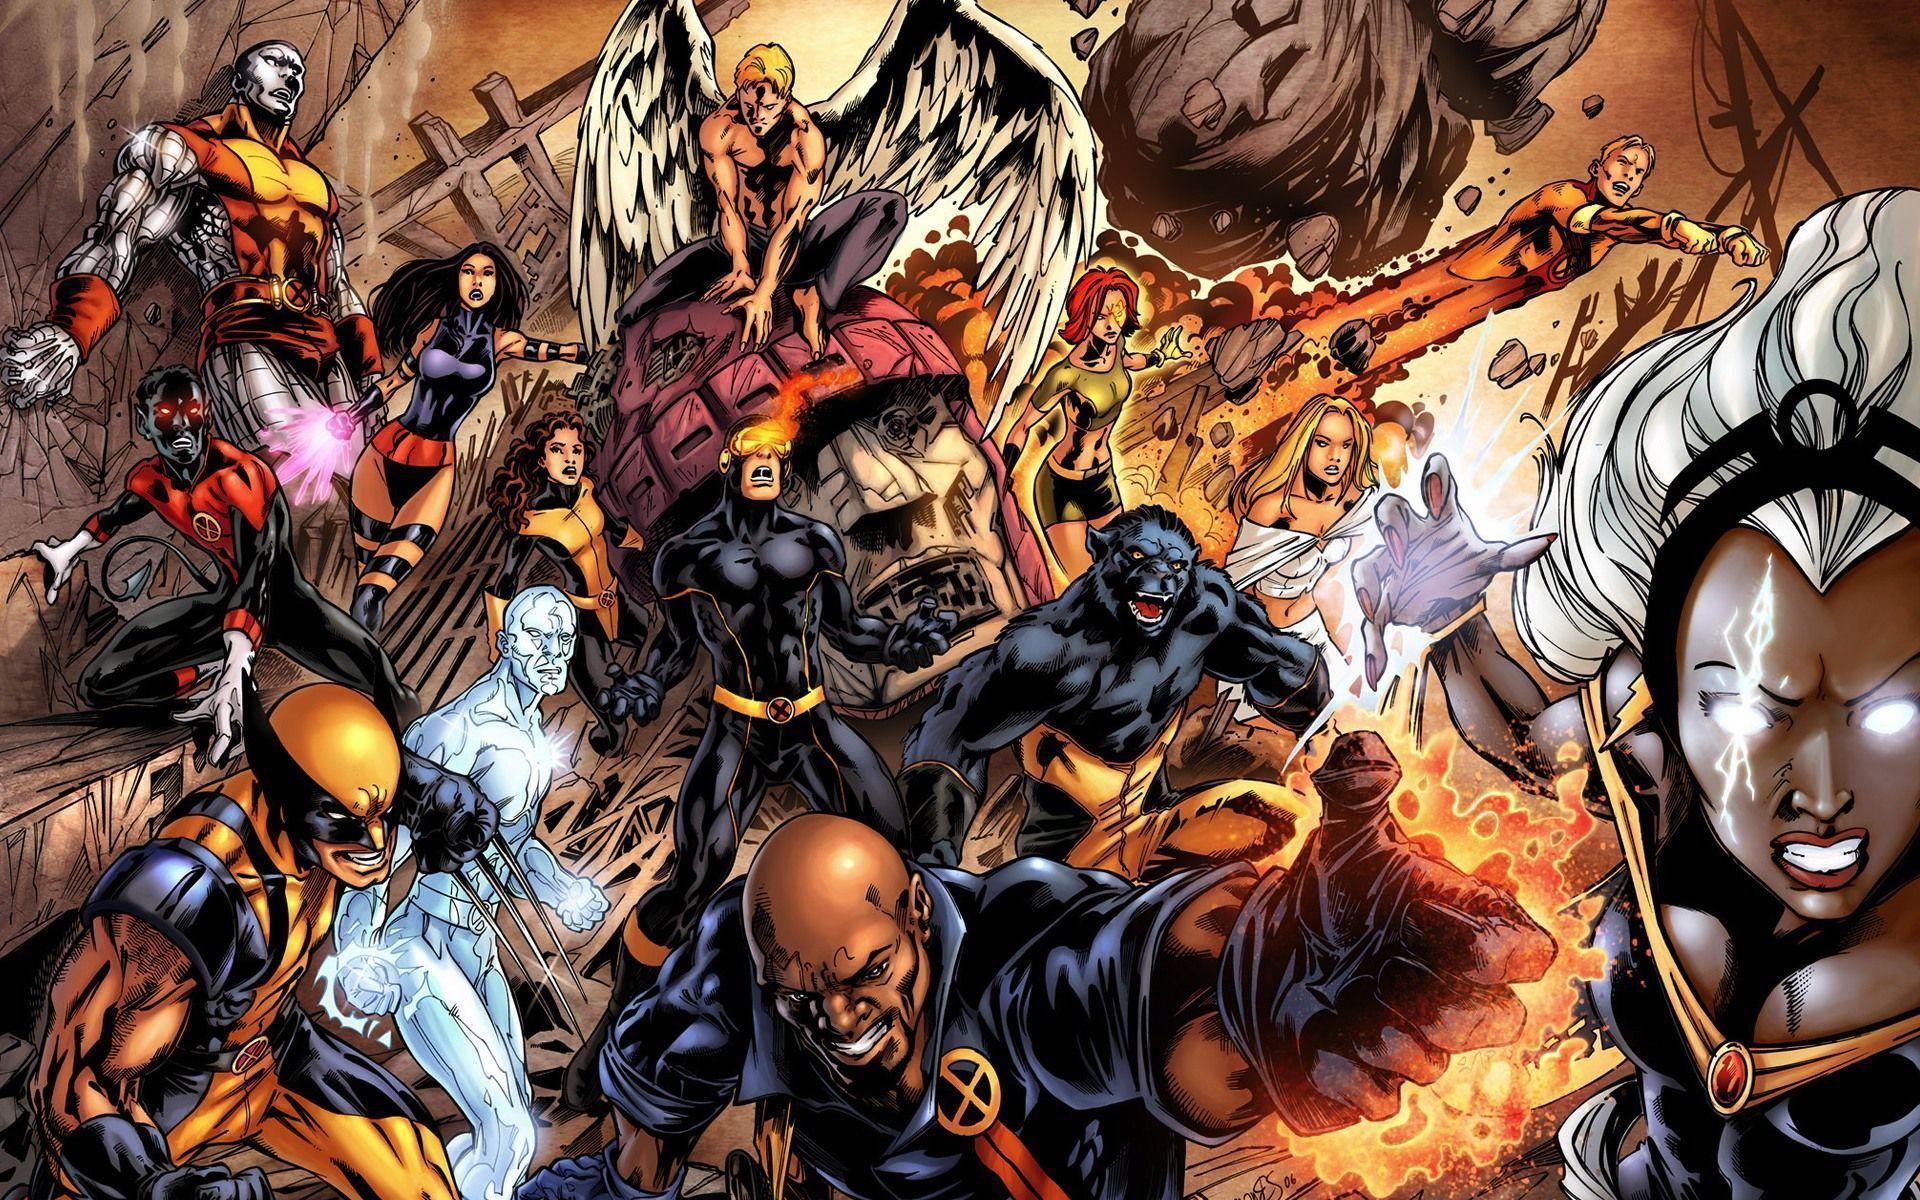 X Men Background Free Download. Wallpaper, Background, Image